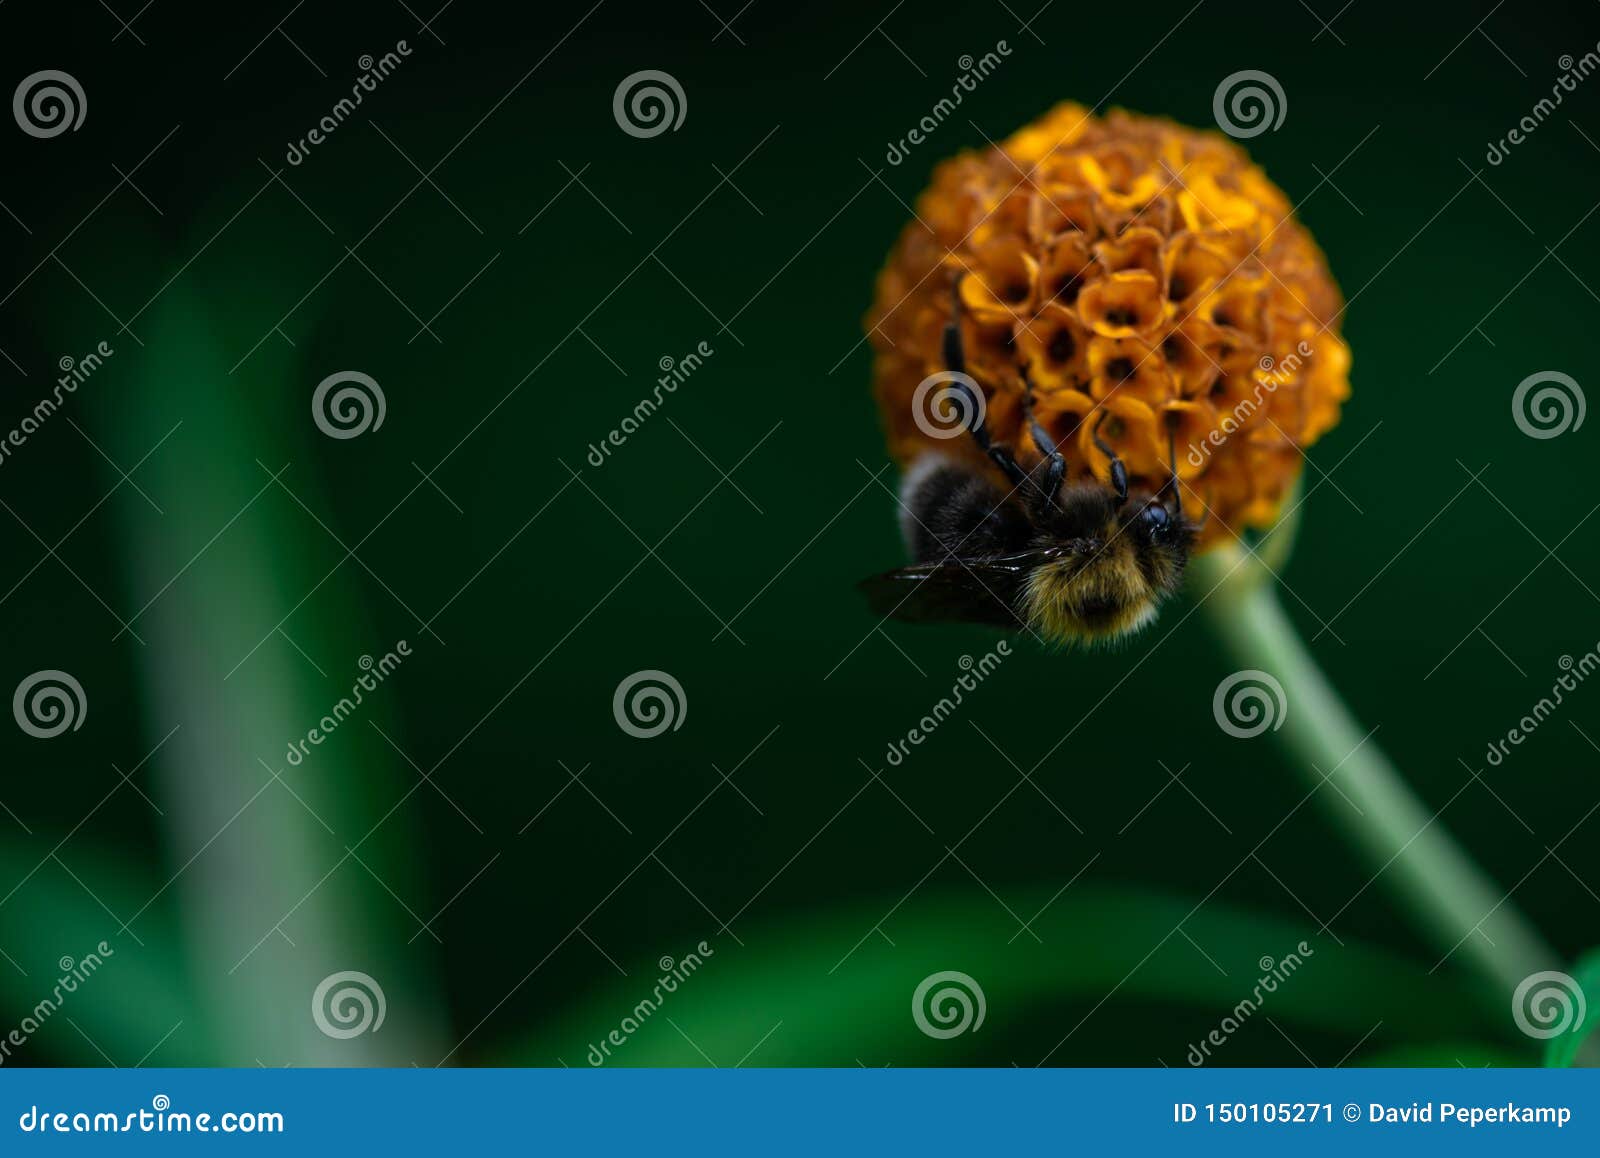 bumblebee is eating nectar on a flower, bombus, arthropoda, hymenoptera, apocrita, apidae